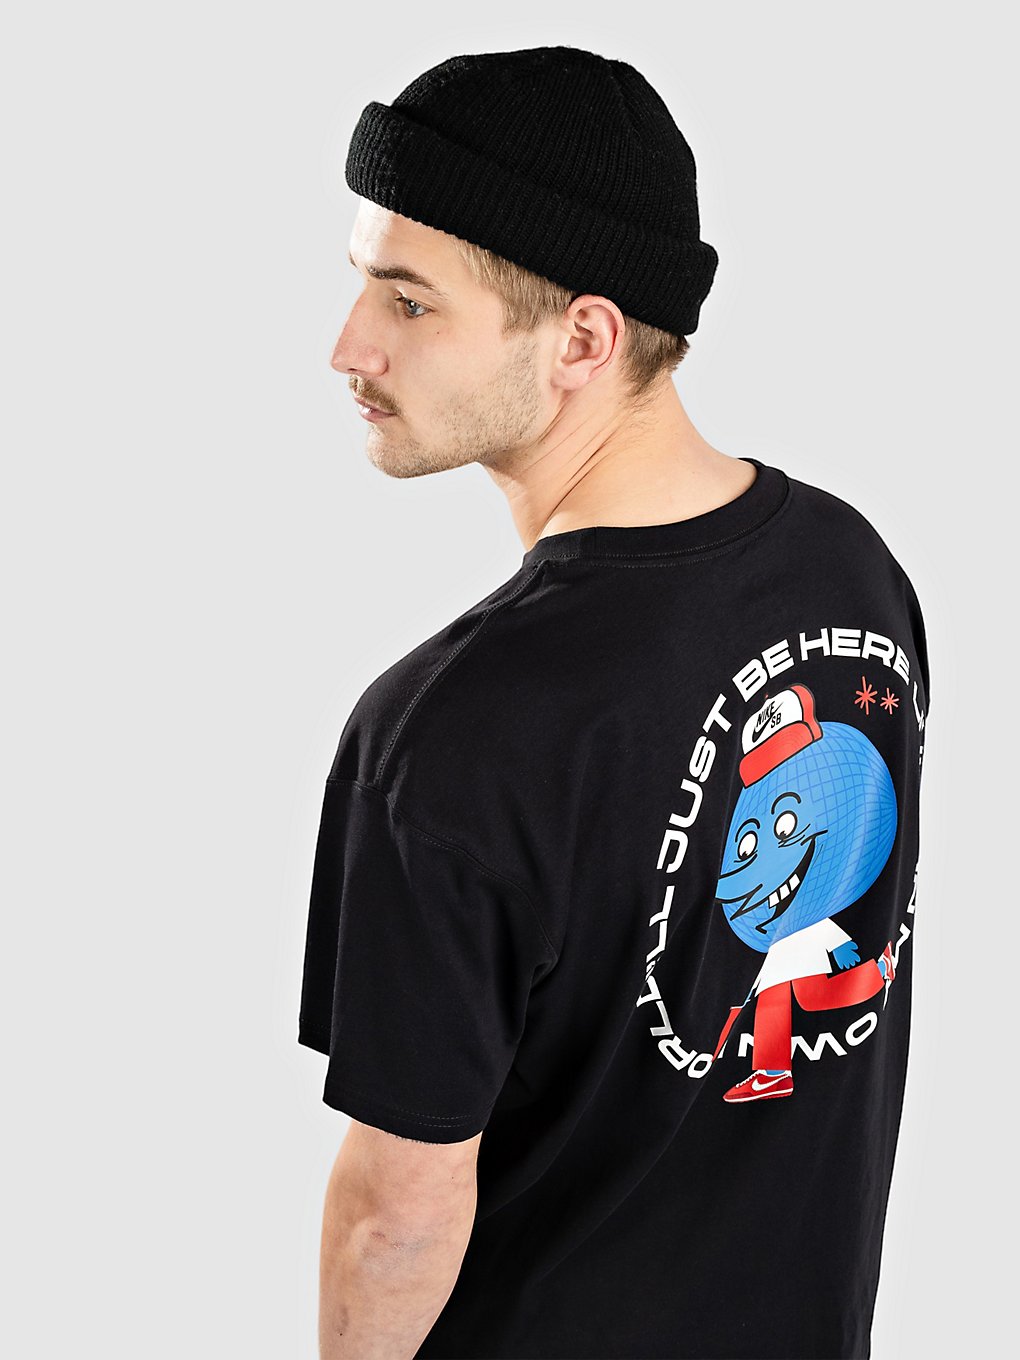 Nike SB Globe Guy T-Shirt black kaufen